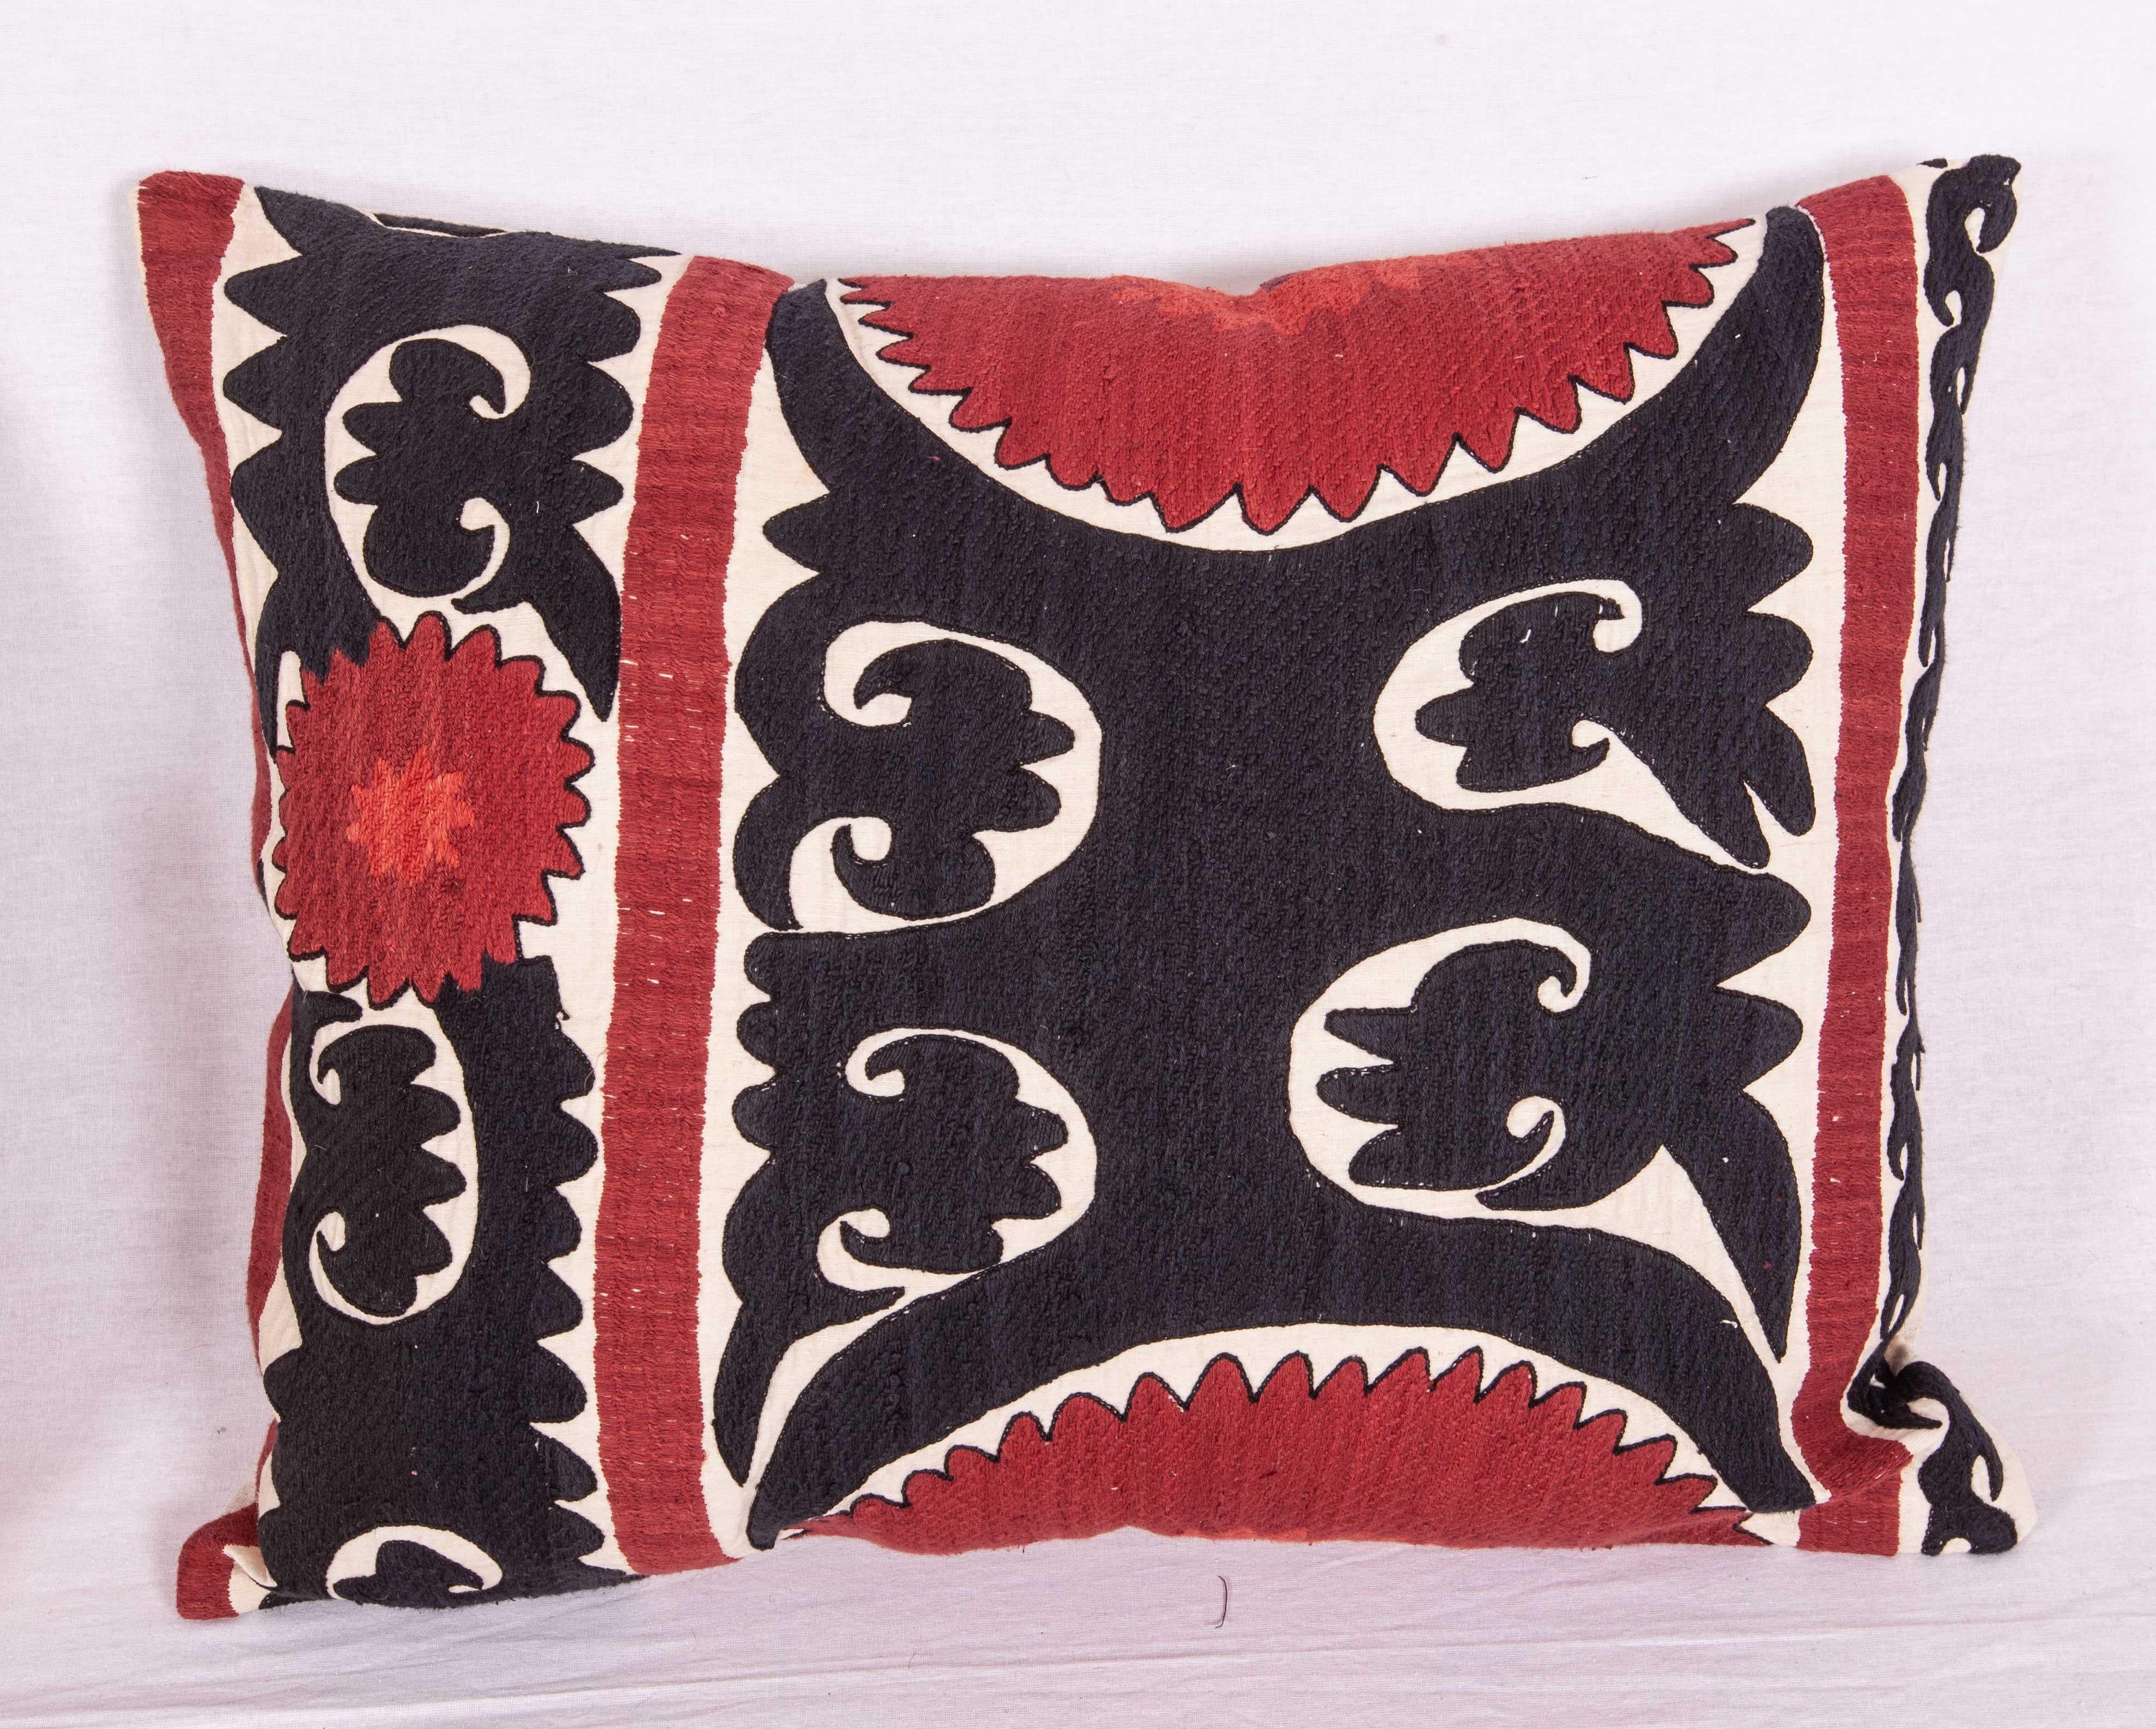 Uzbek Pillow/Cushion Cases Fashioned from a Midcentury Suzani